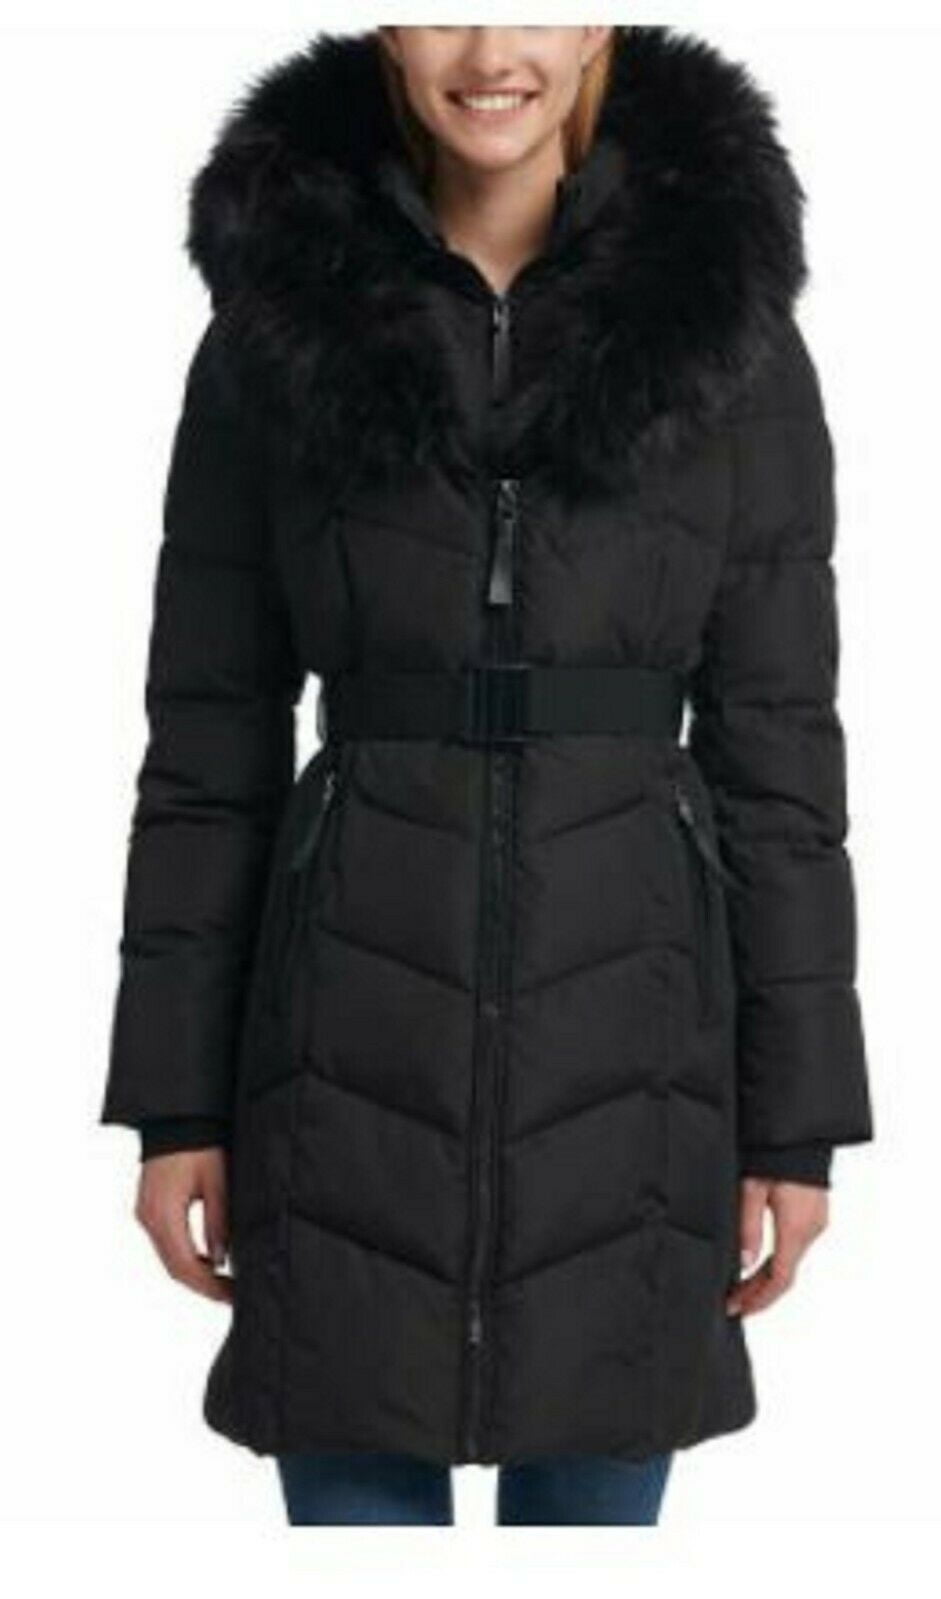 Calvin Klein Faux Fur-Trim Belted Quilted Parka Coat Jacket Size: M ...